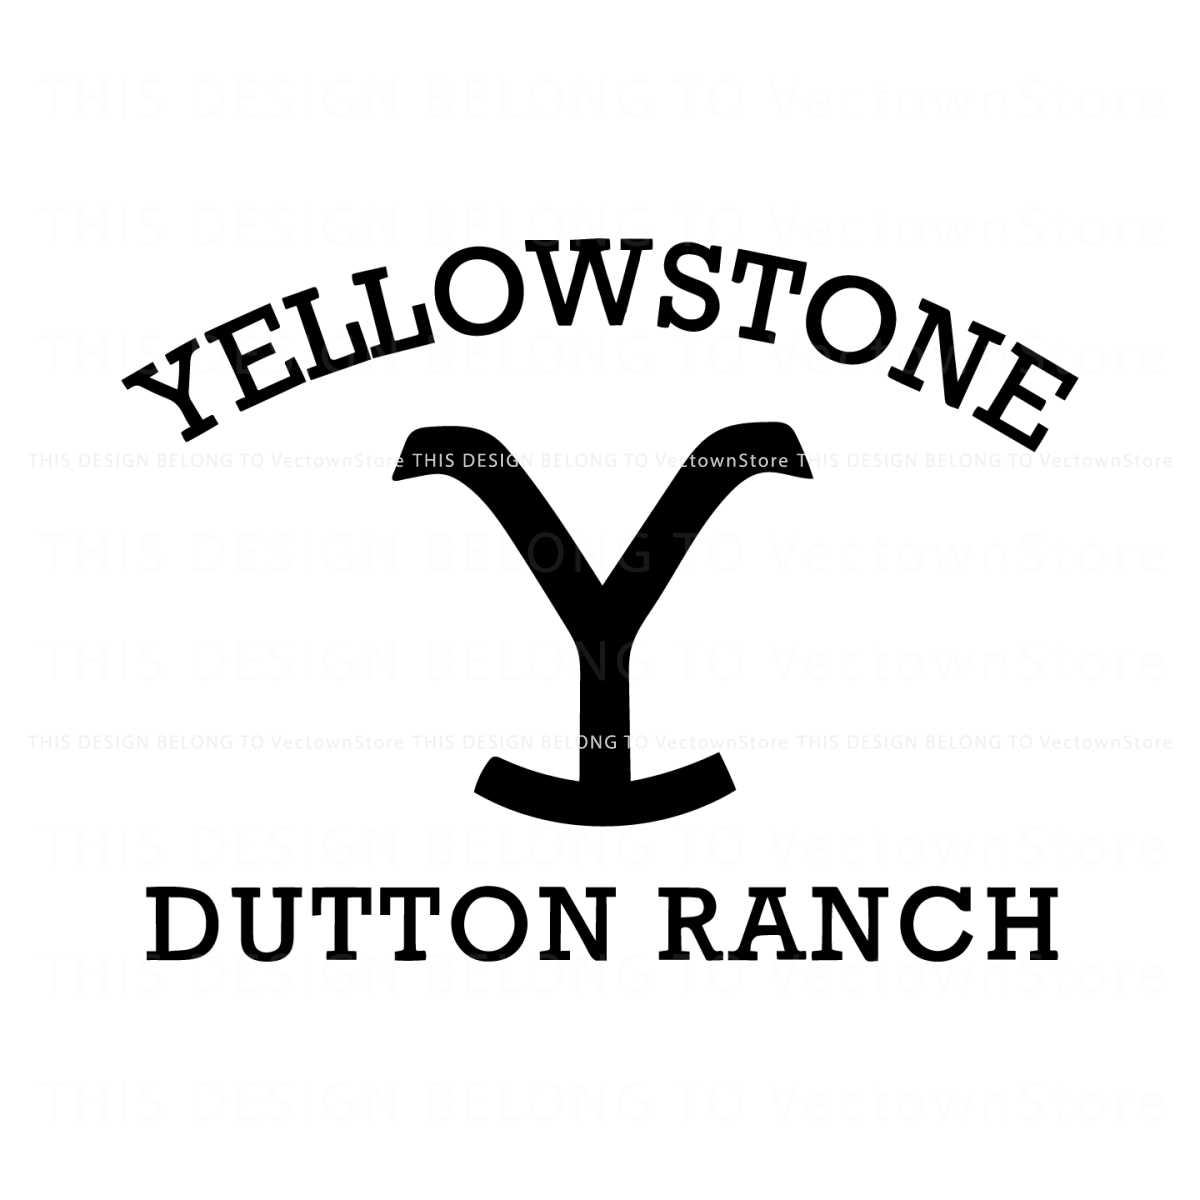 Retro Yellowstone Dutton Ranch SVG